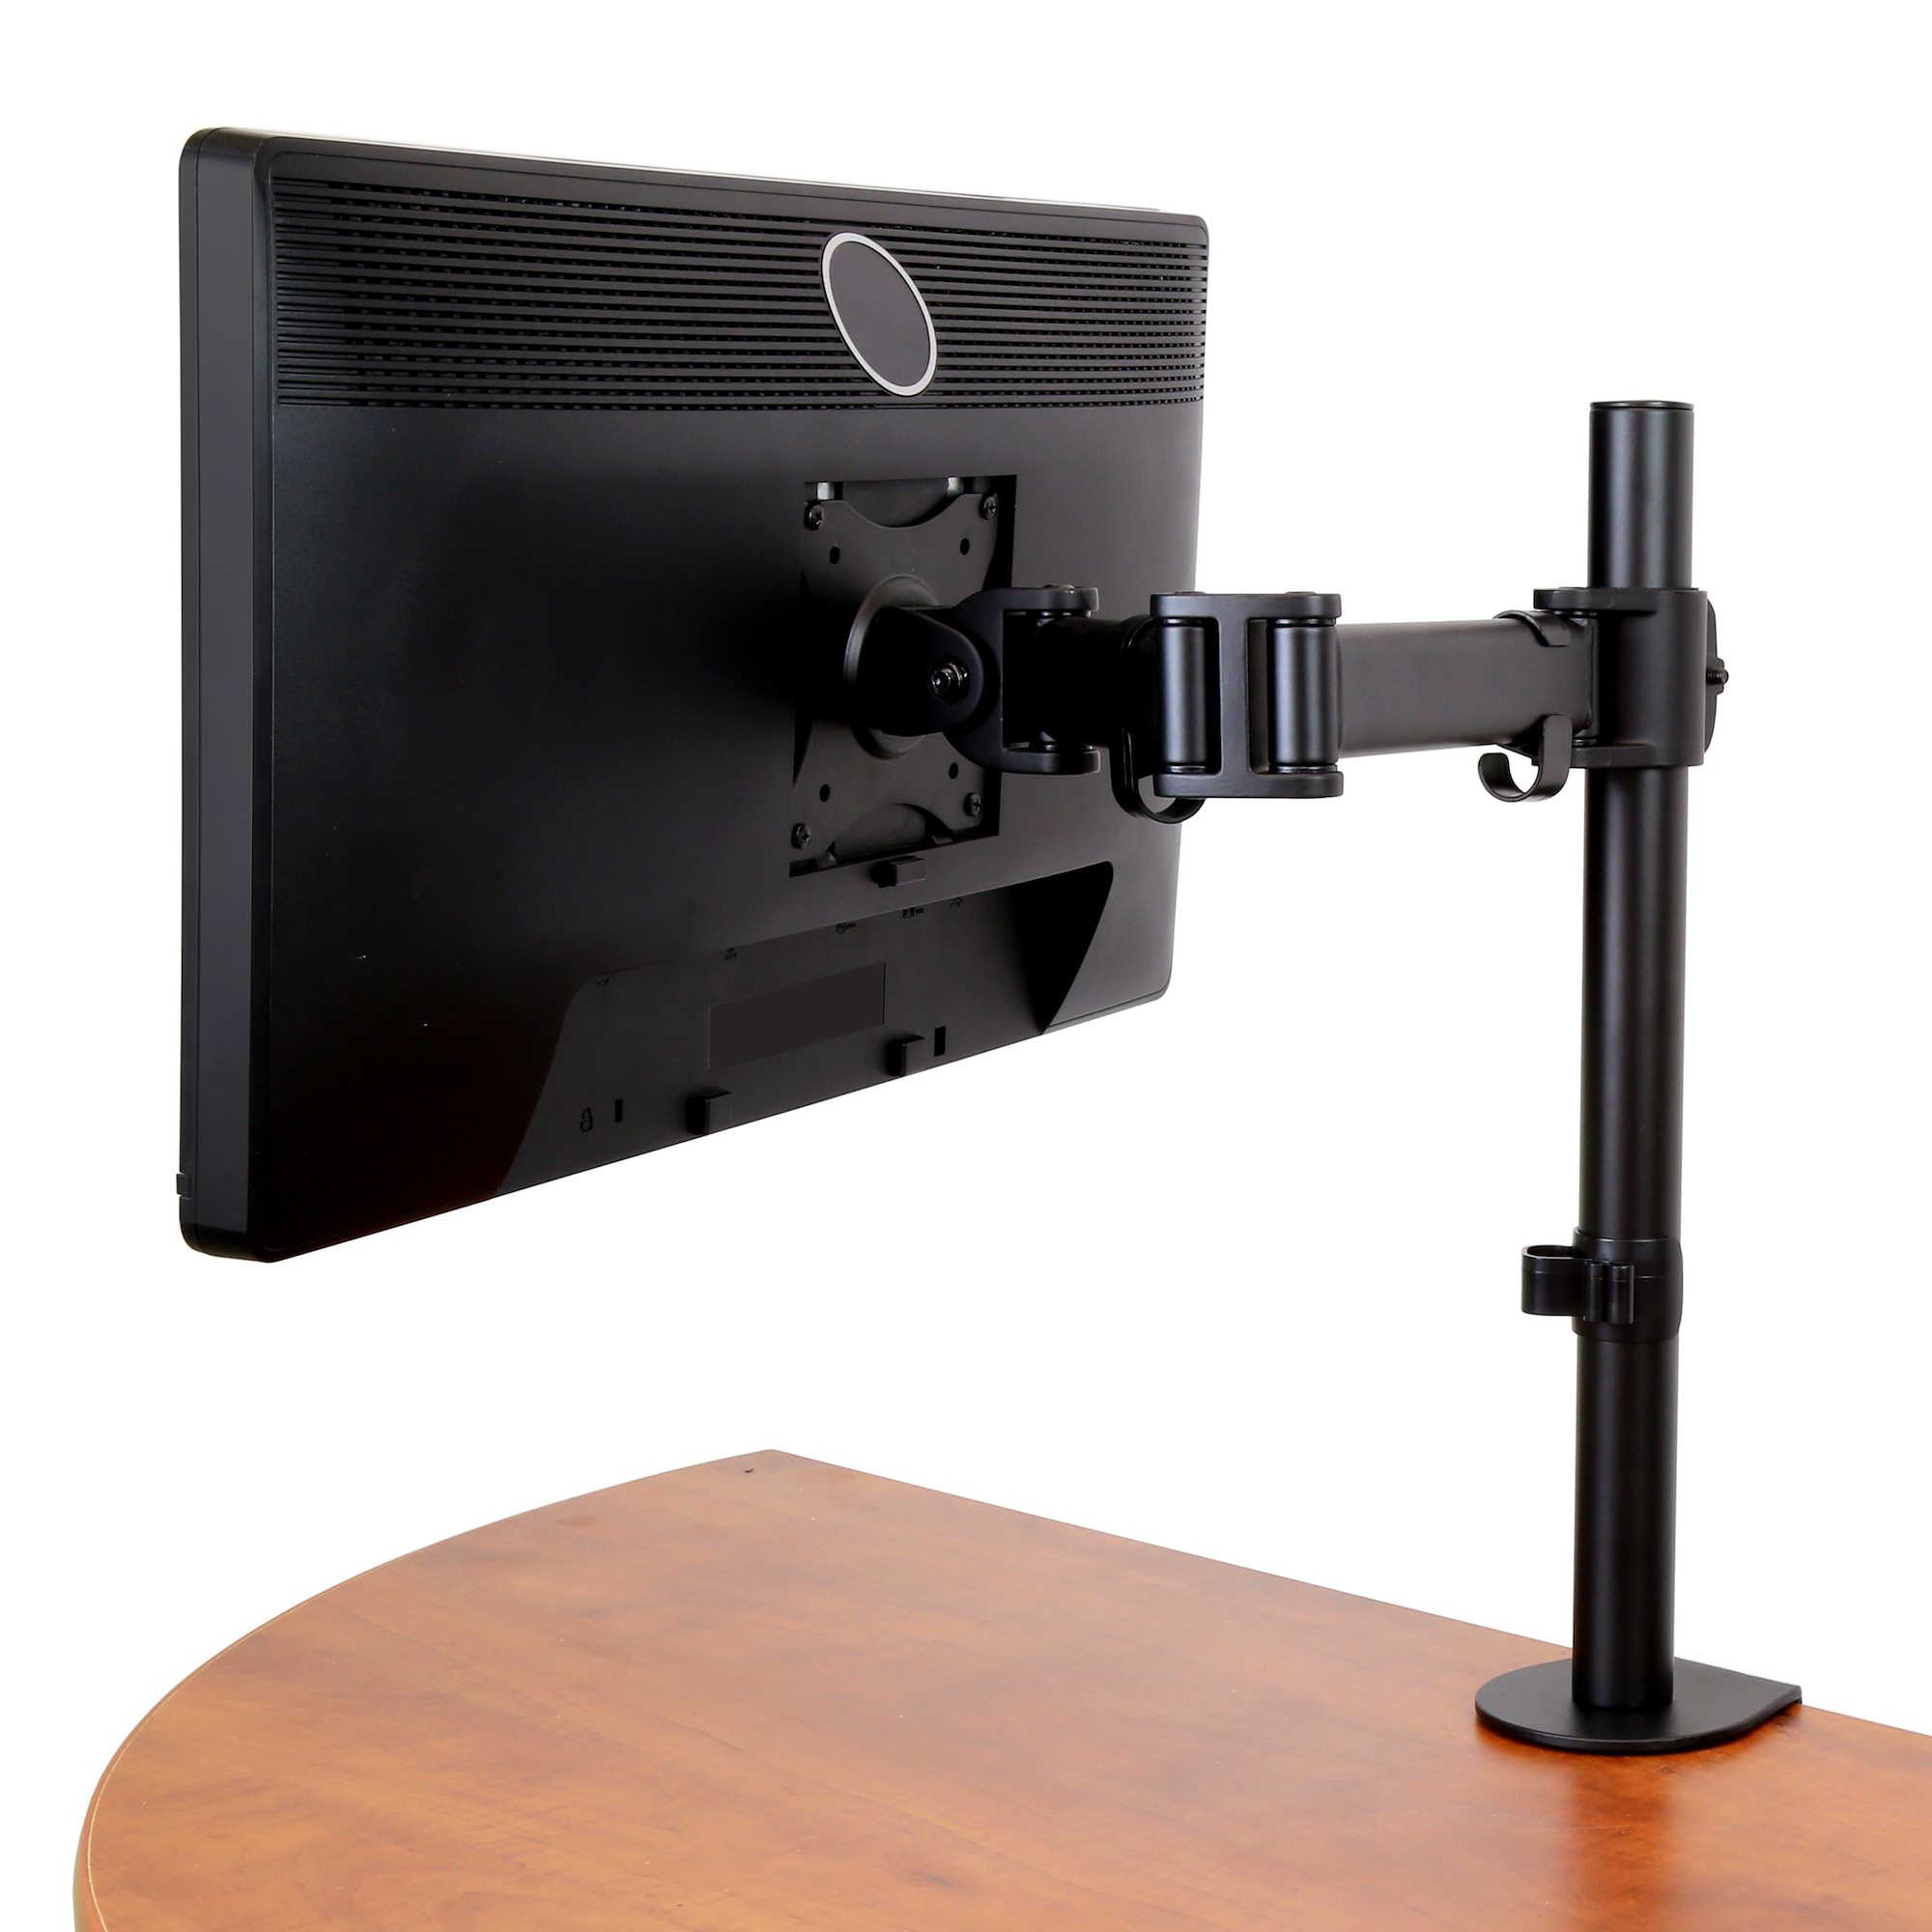 ARMPIVOTB Desk Mount Monitor Arm for up to 34